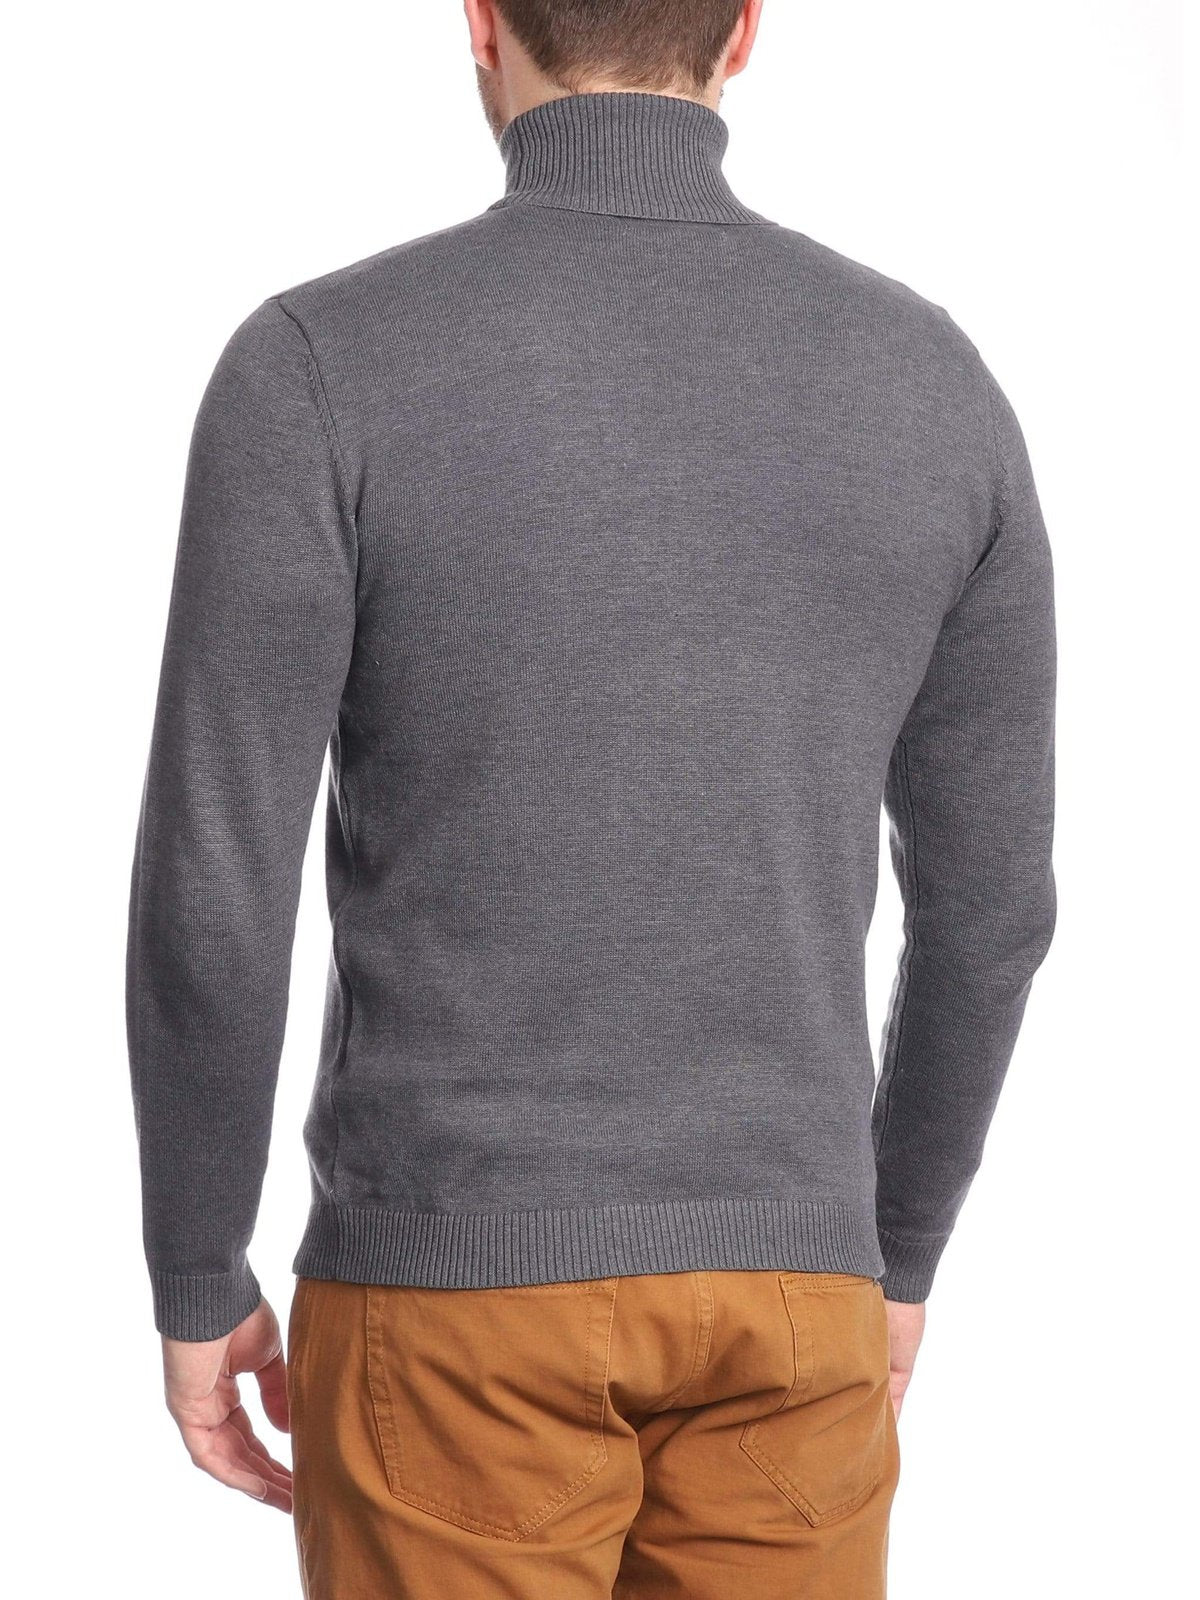 Arthur Black SWEATERS Arthur Black Men's Solid Light Gray Pullover Cotton Blend Turtleneck Sweater Shirt